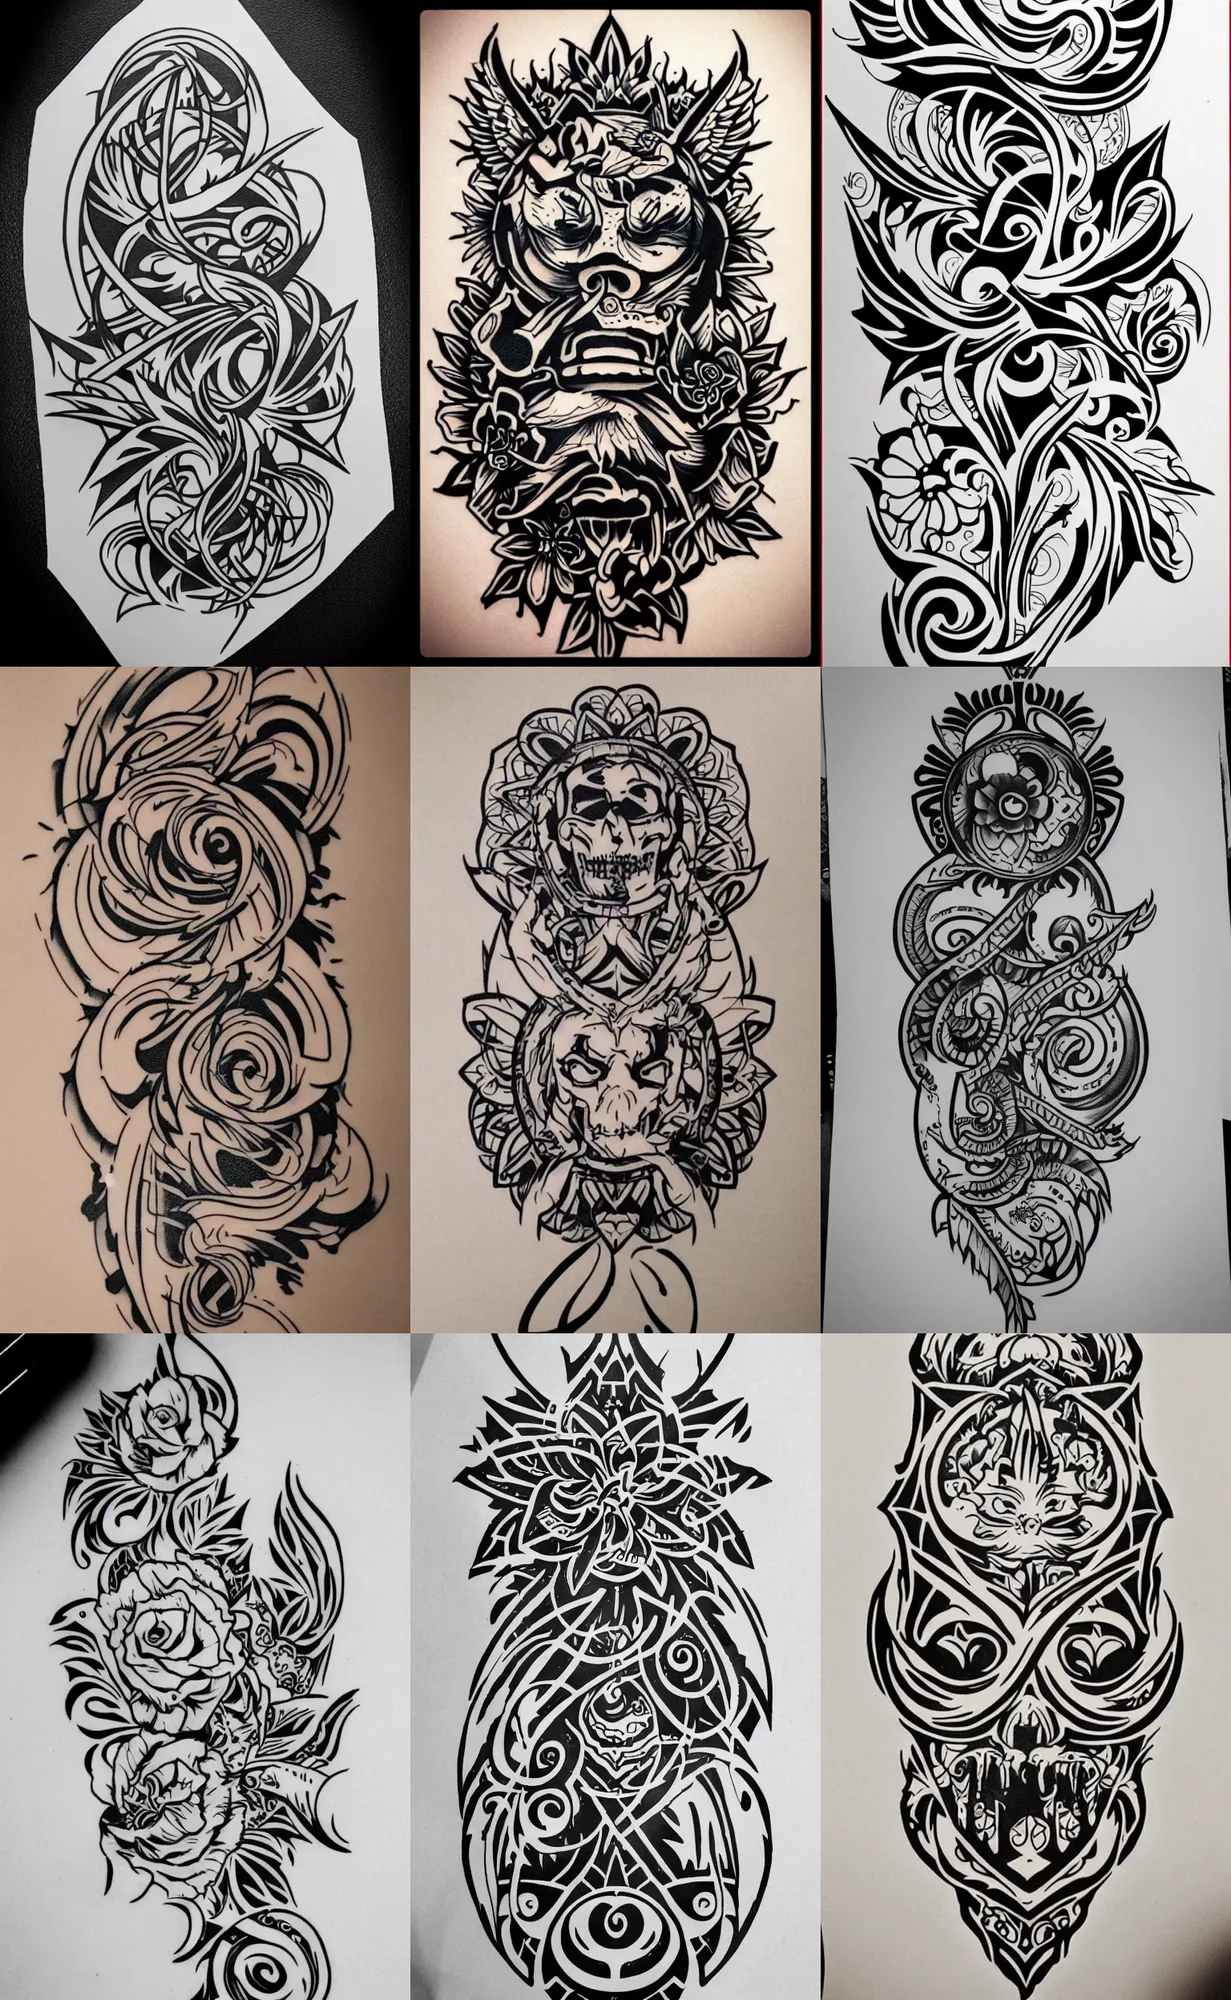 Abstract Arts Tattoos  Toronto  eastsideto Owl hand tattoo by Mark N  Lower